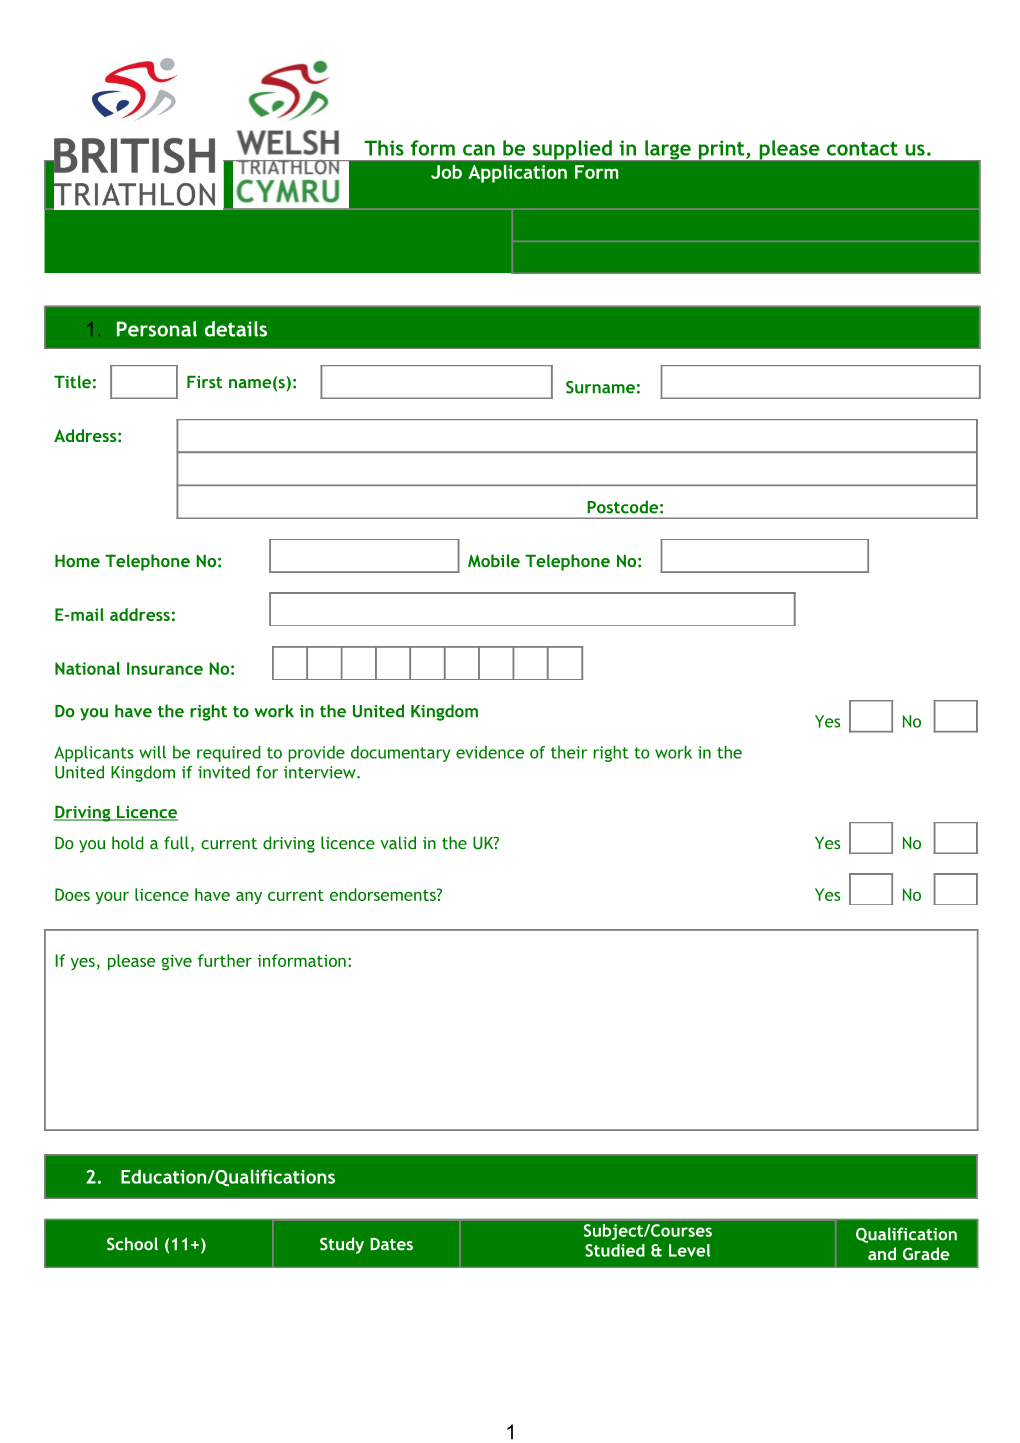 Welsh Triathlon Job Application Form 2016